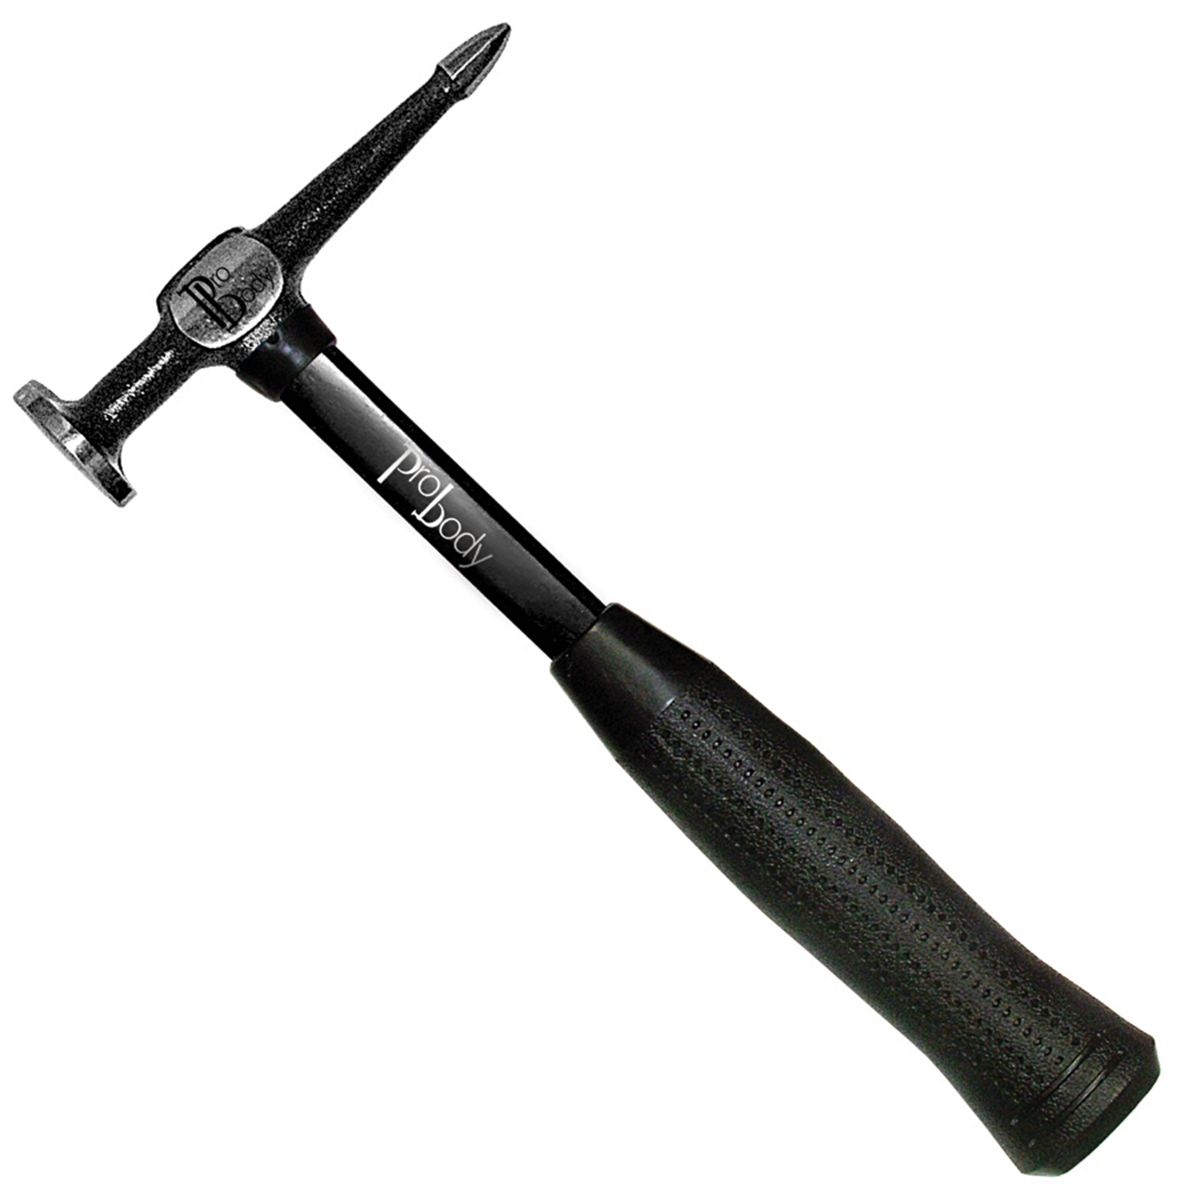 General Purpose Pick Hammer with Fiberglass hdl